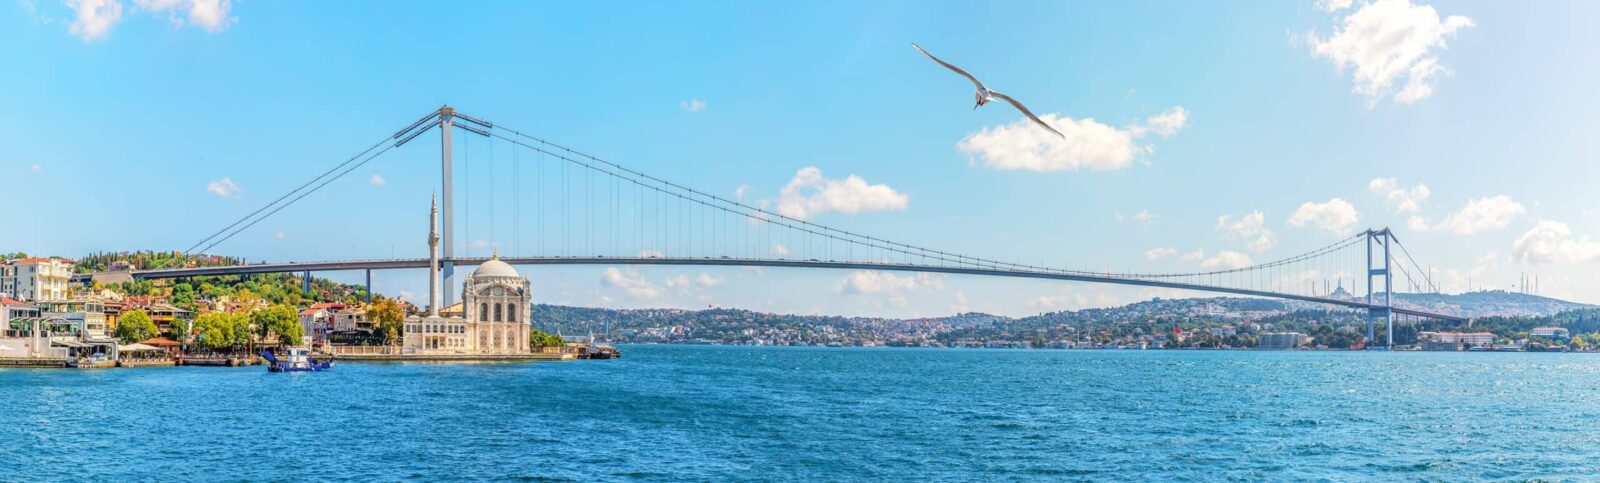 istanbul-bosphorus-tour-guide